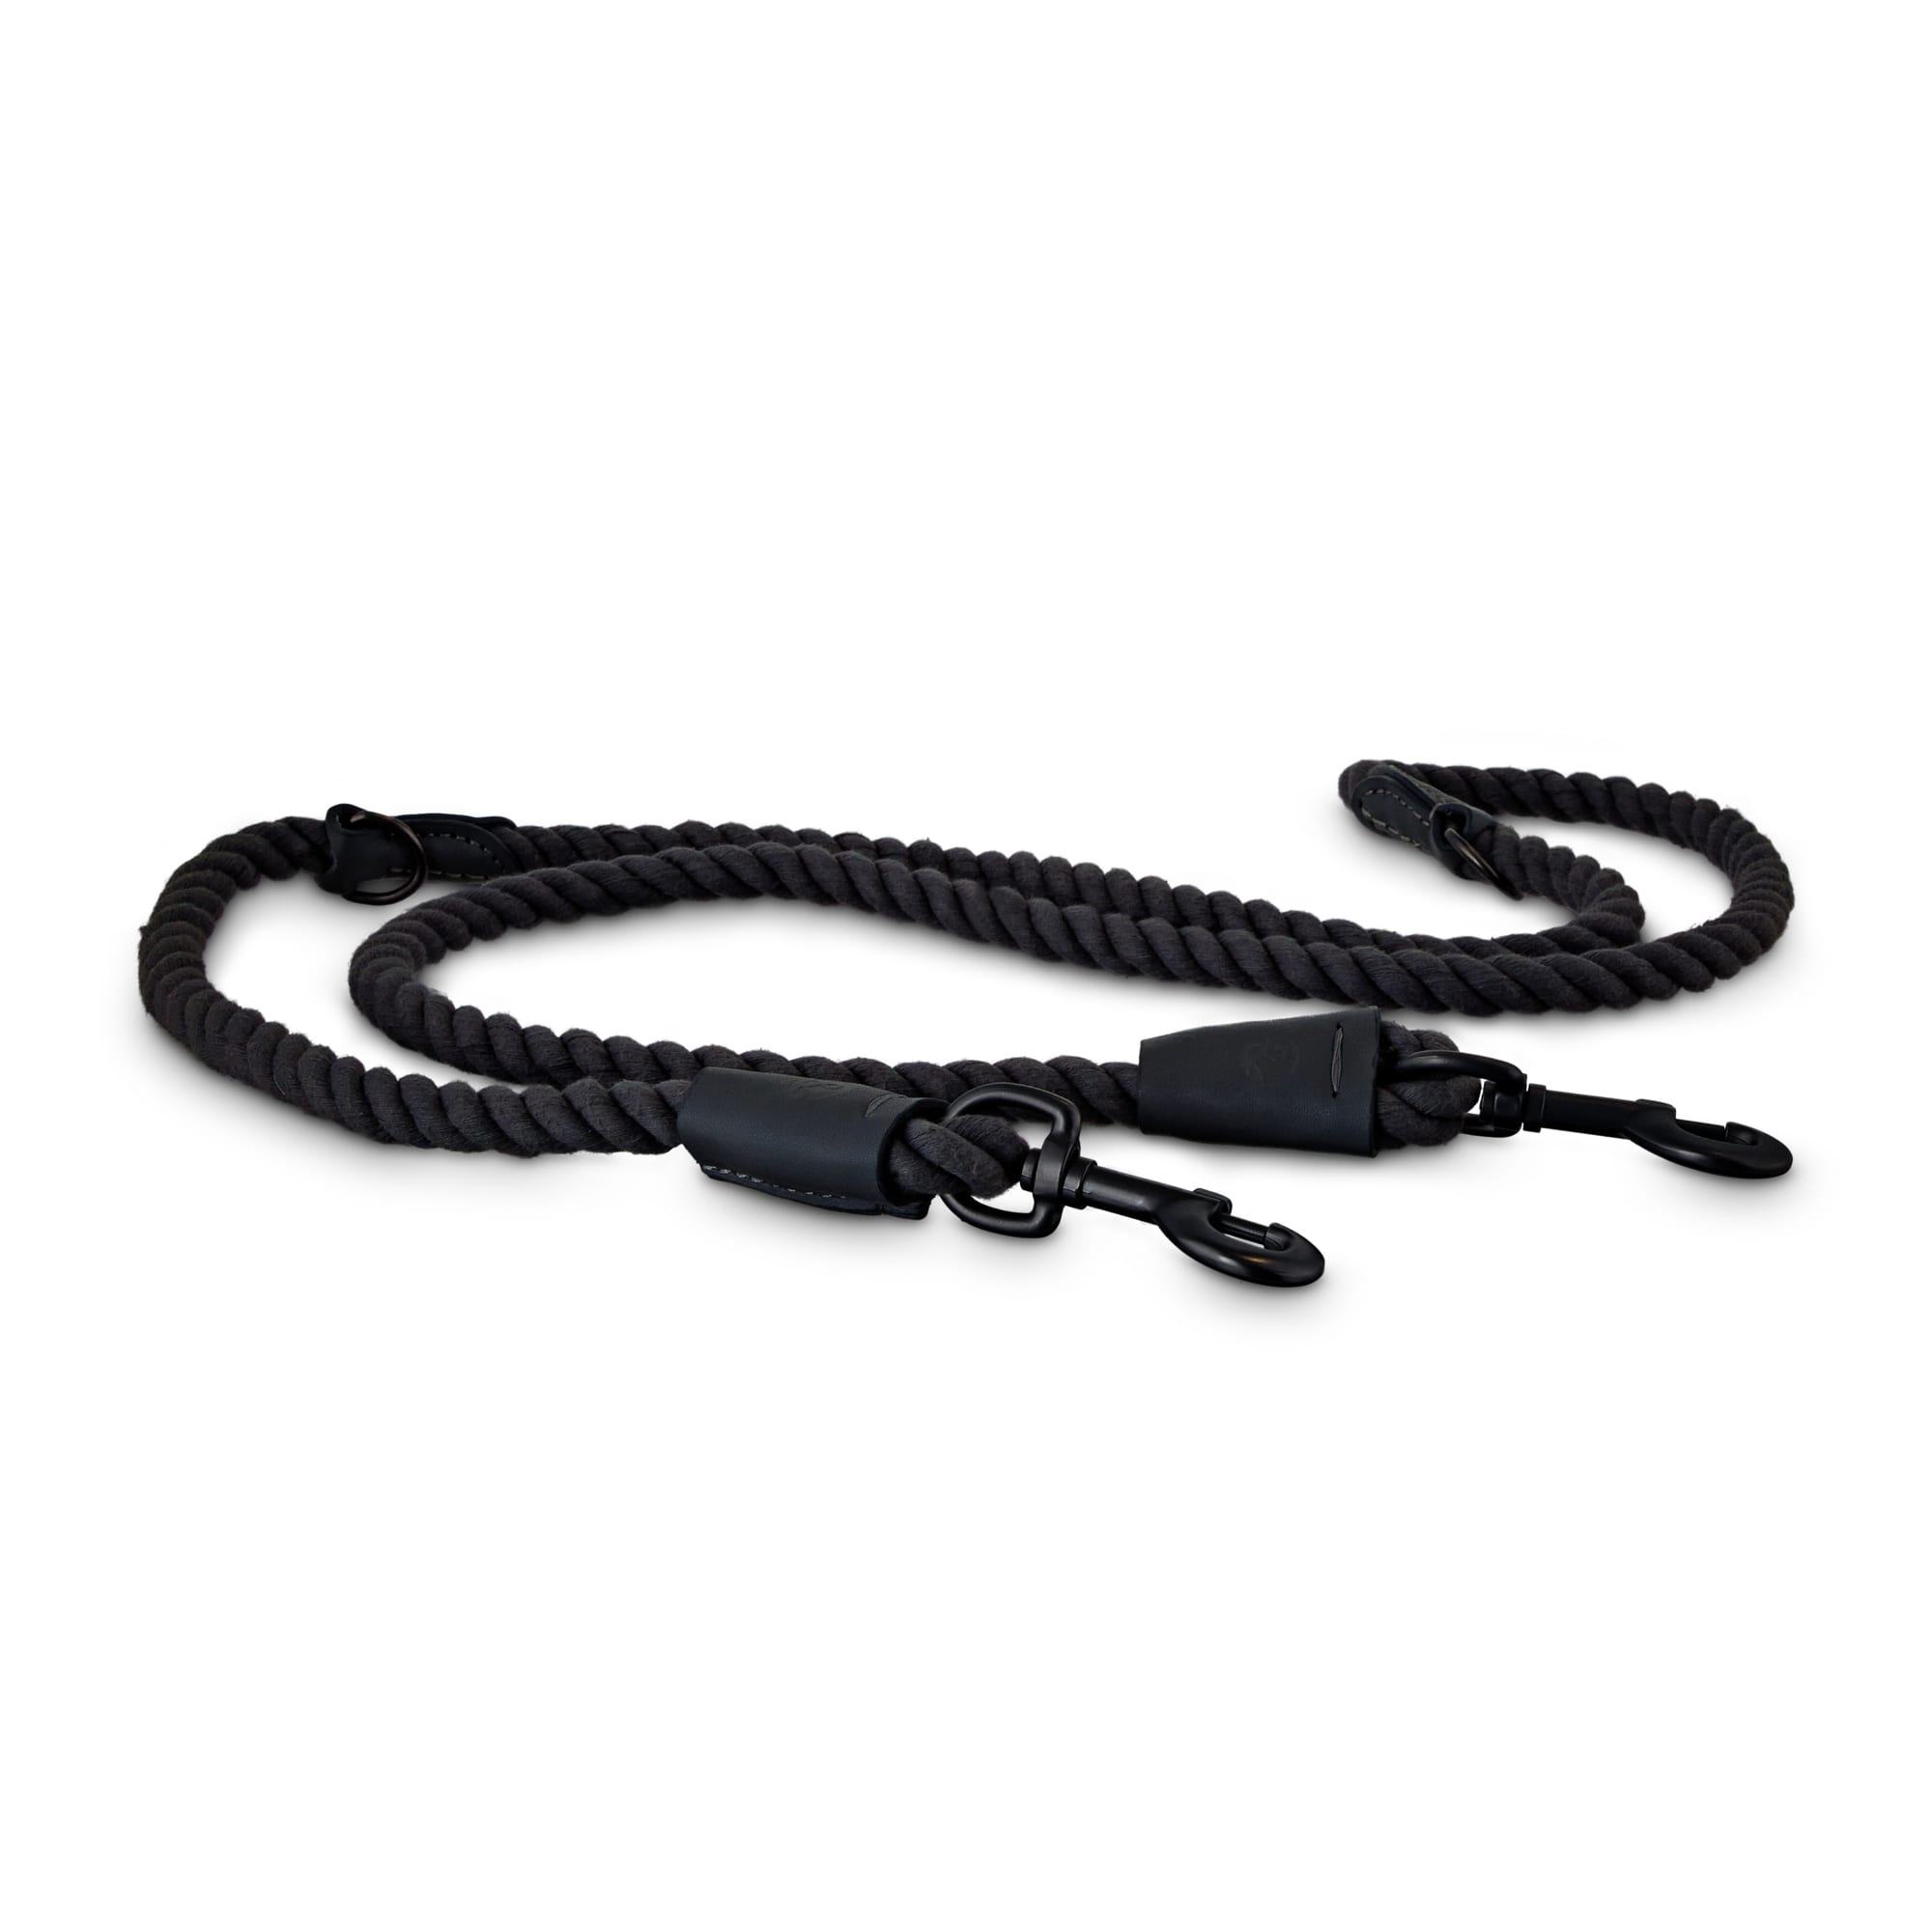 Co. Multi-Purpose Black Rope Dog Leash 